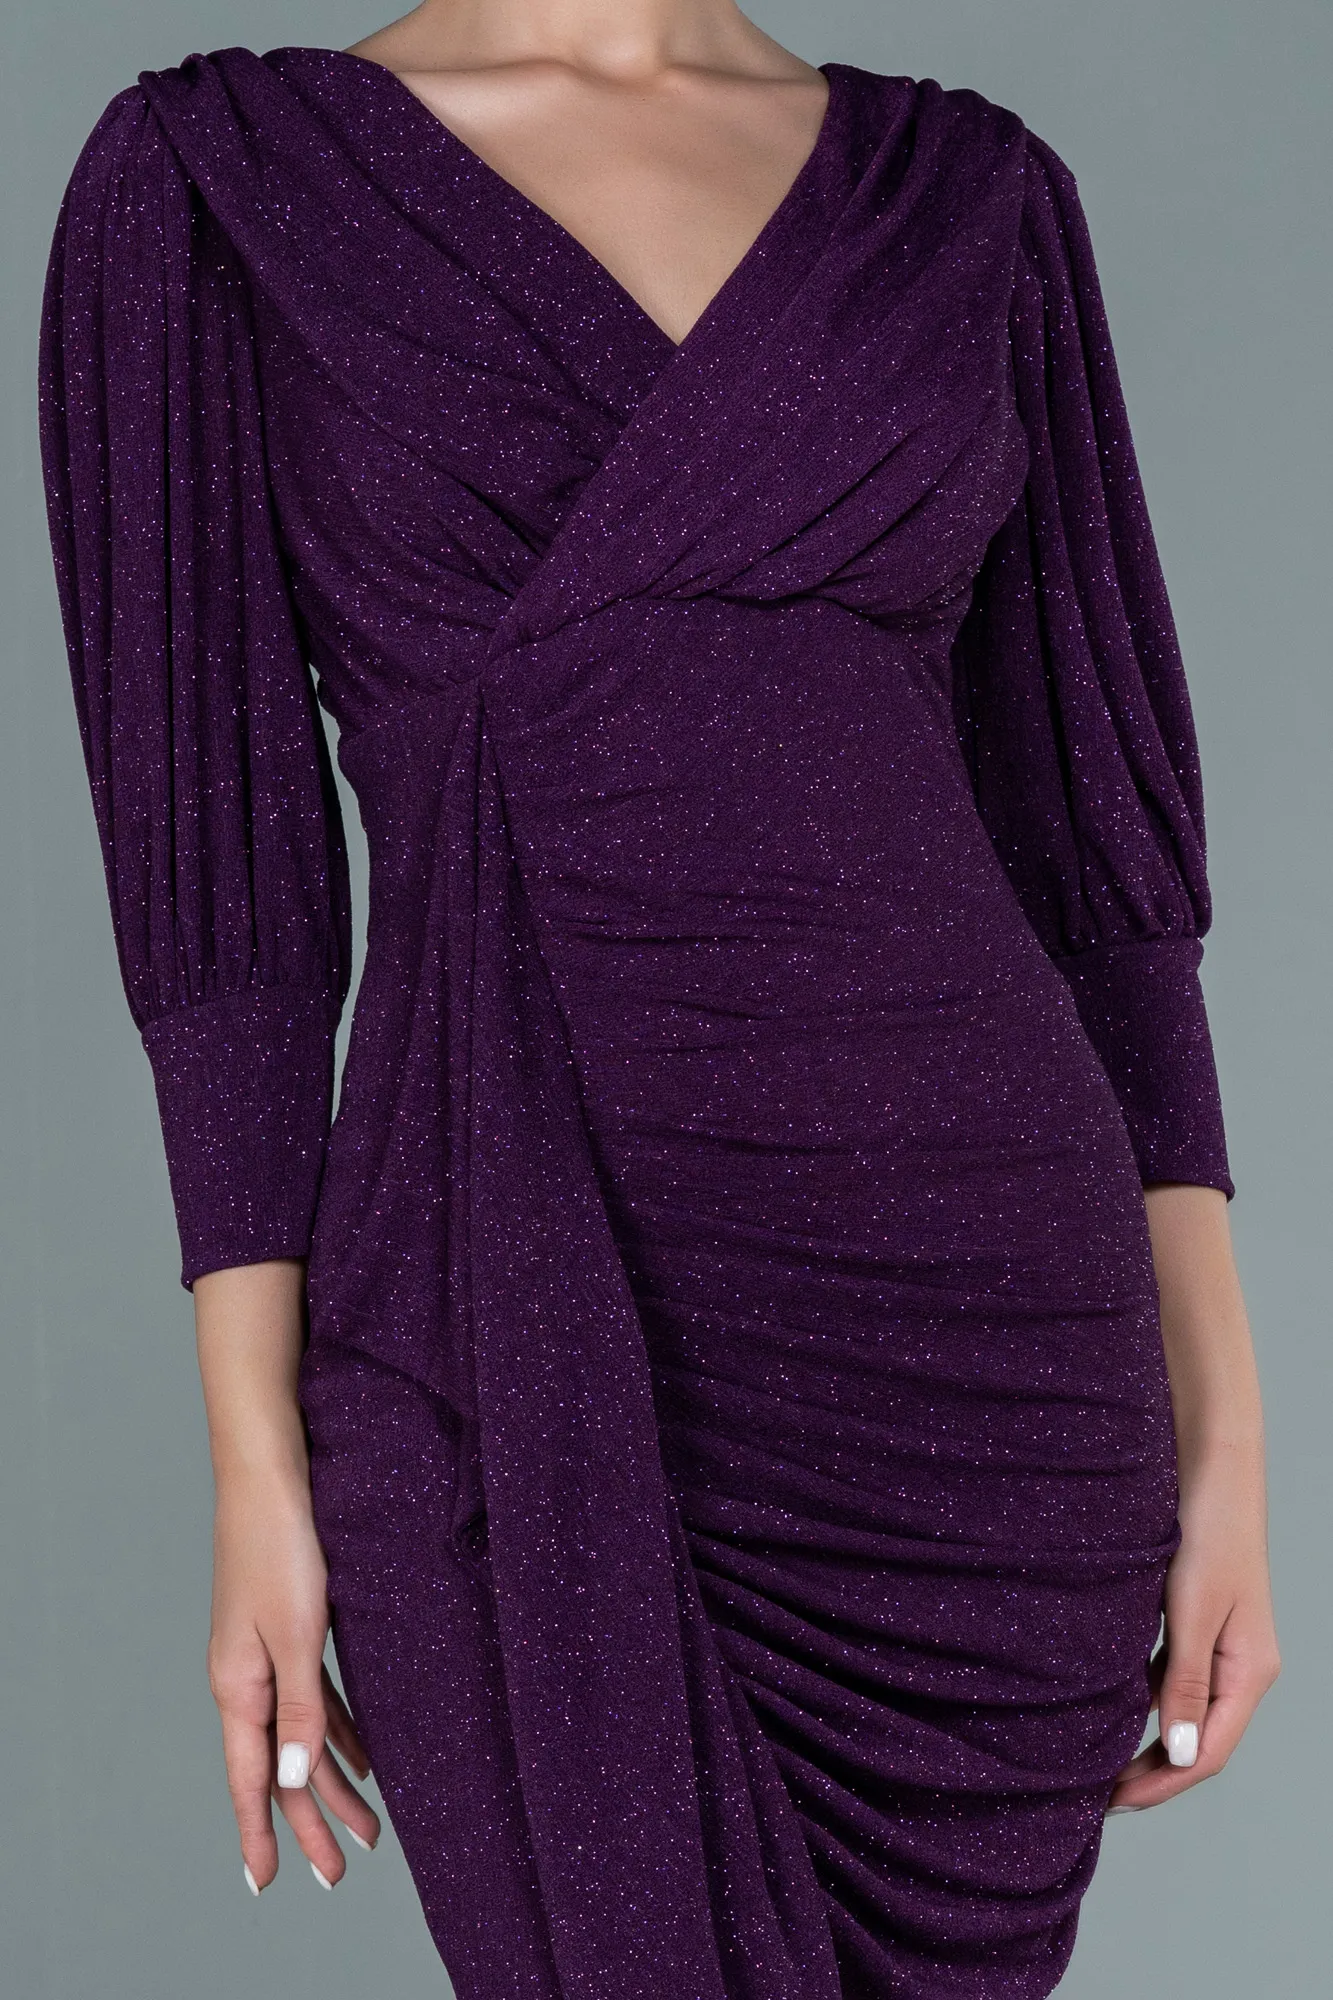 Purple-Long Mermaid Prom Dress ABU2619